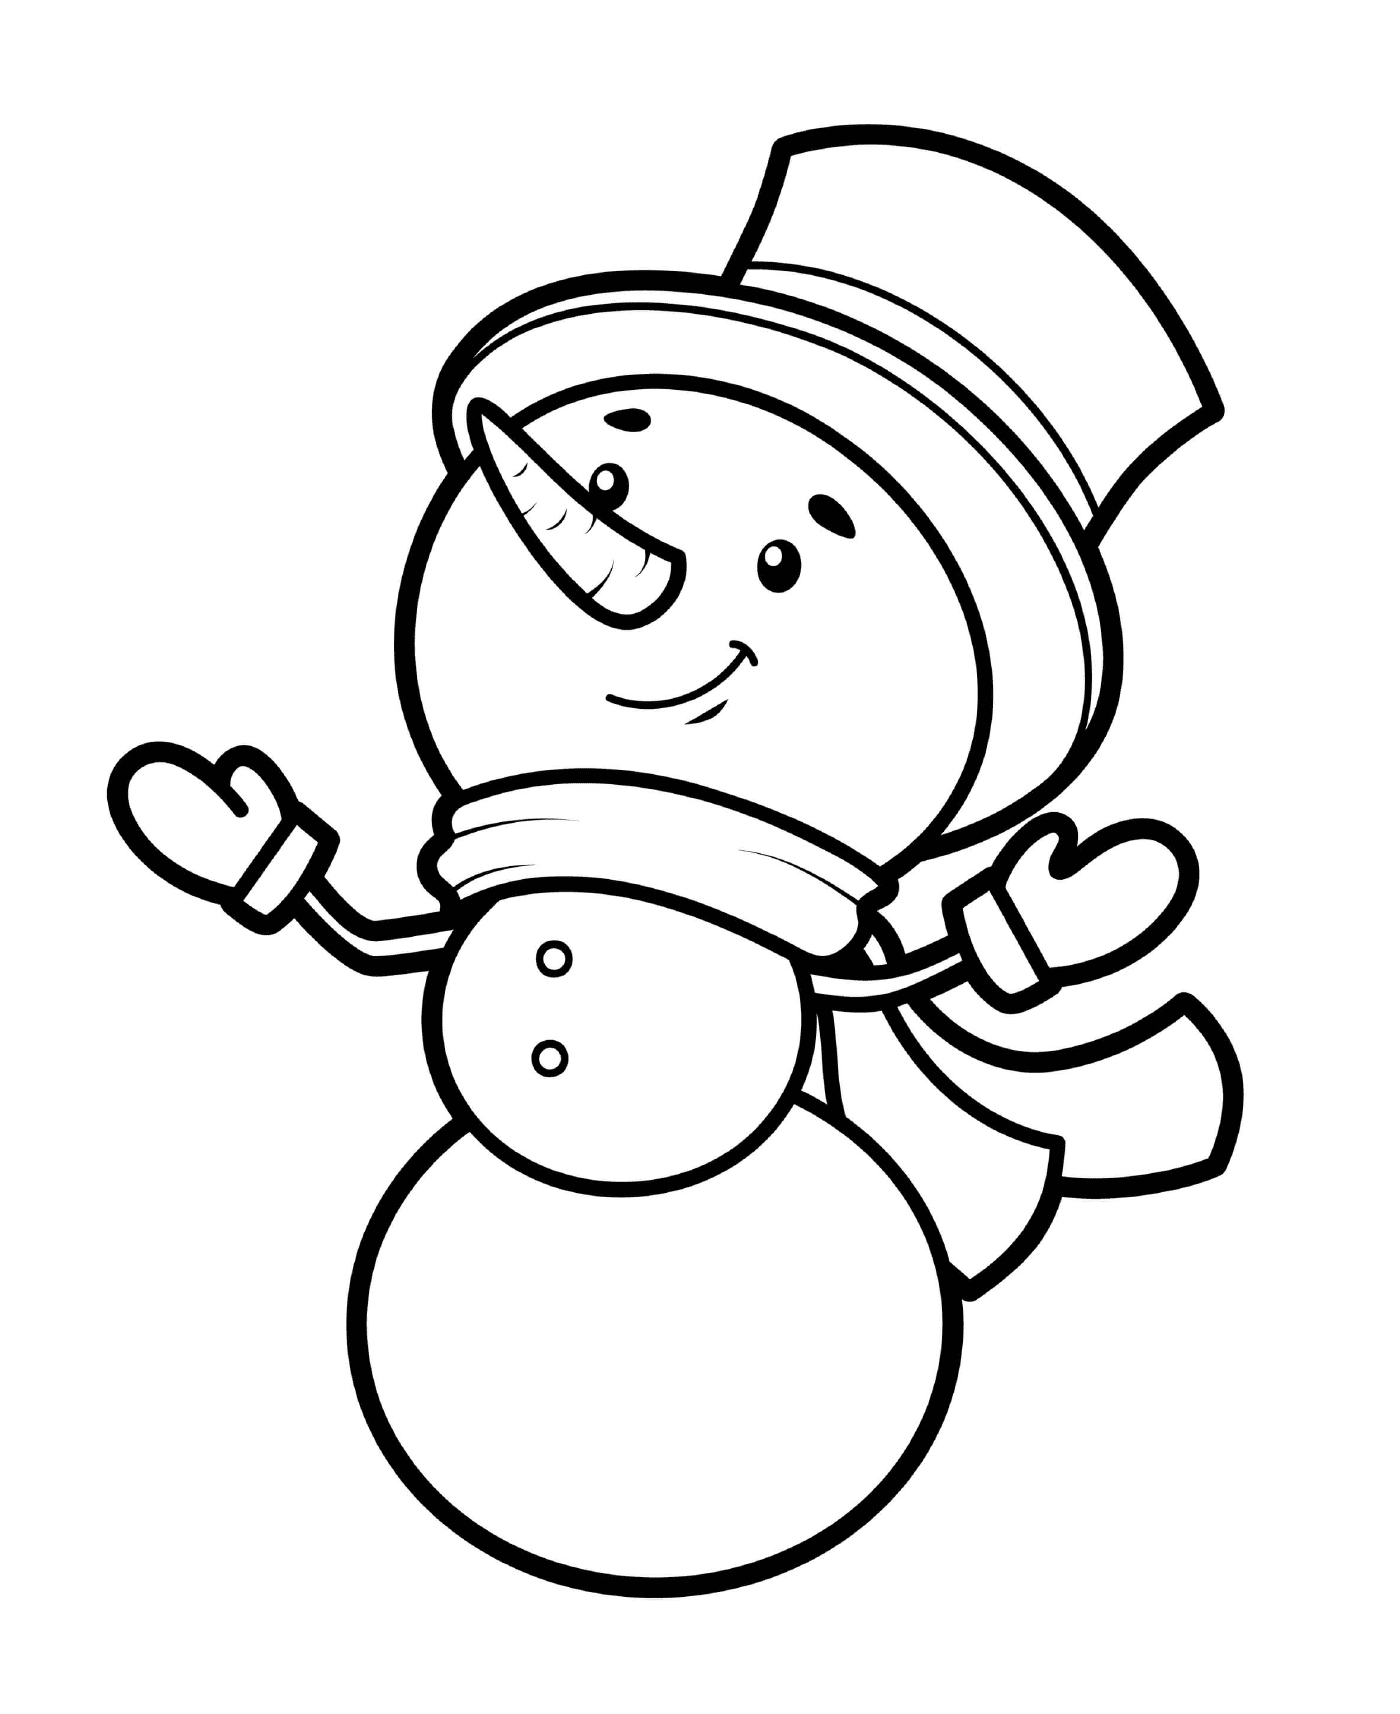  A smiling snowman 